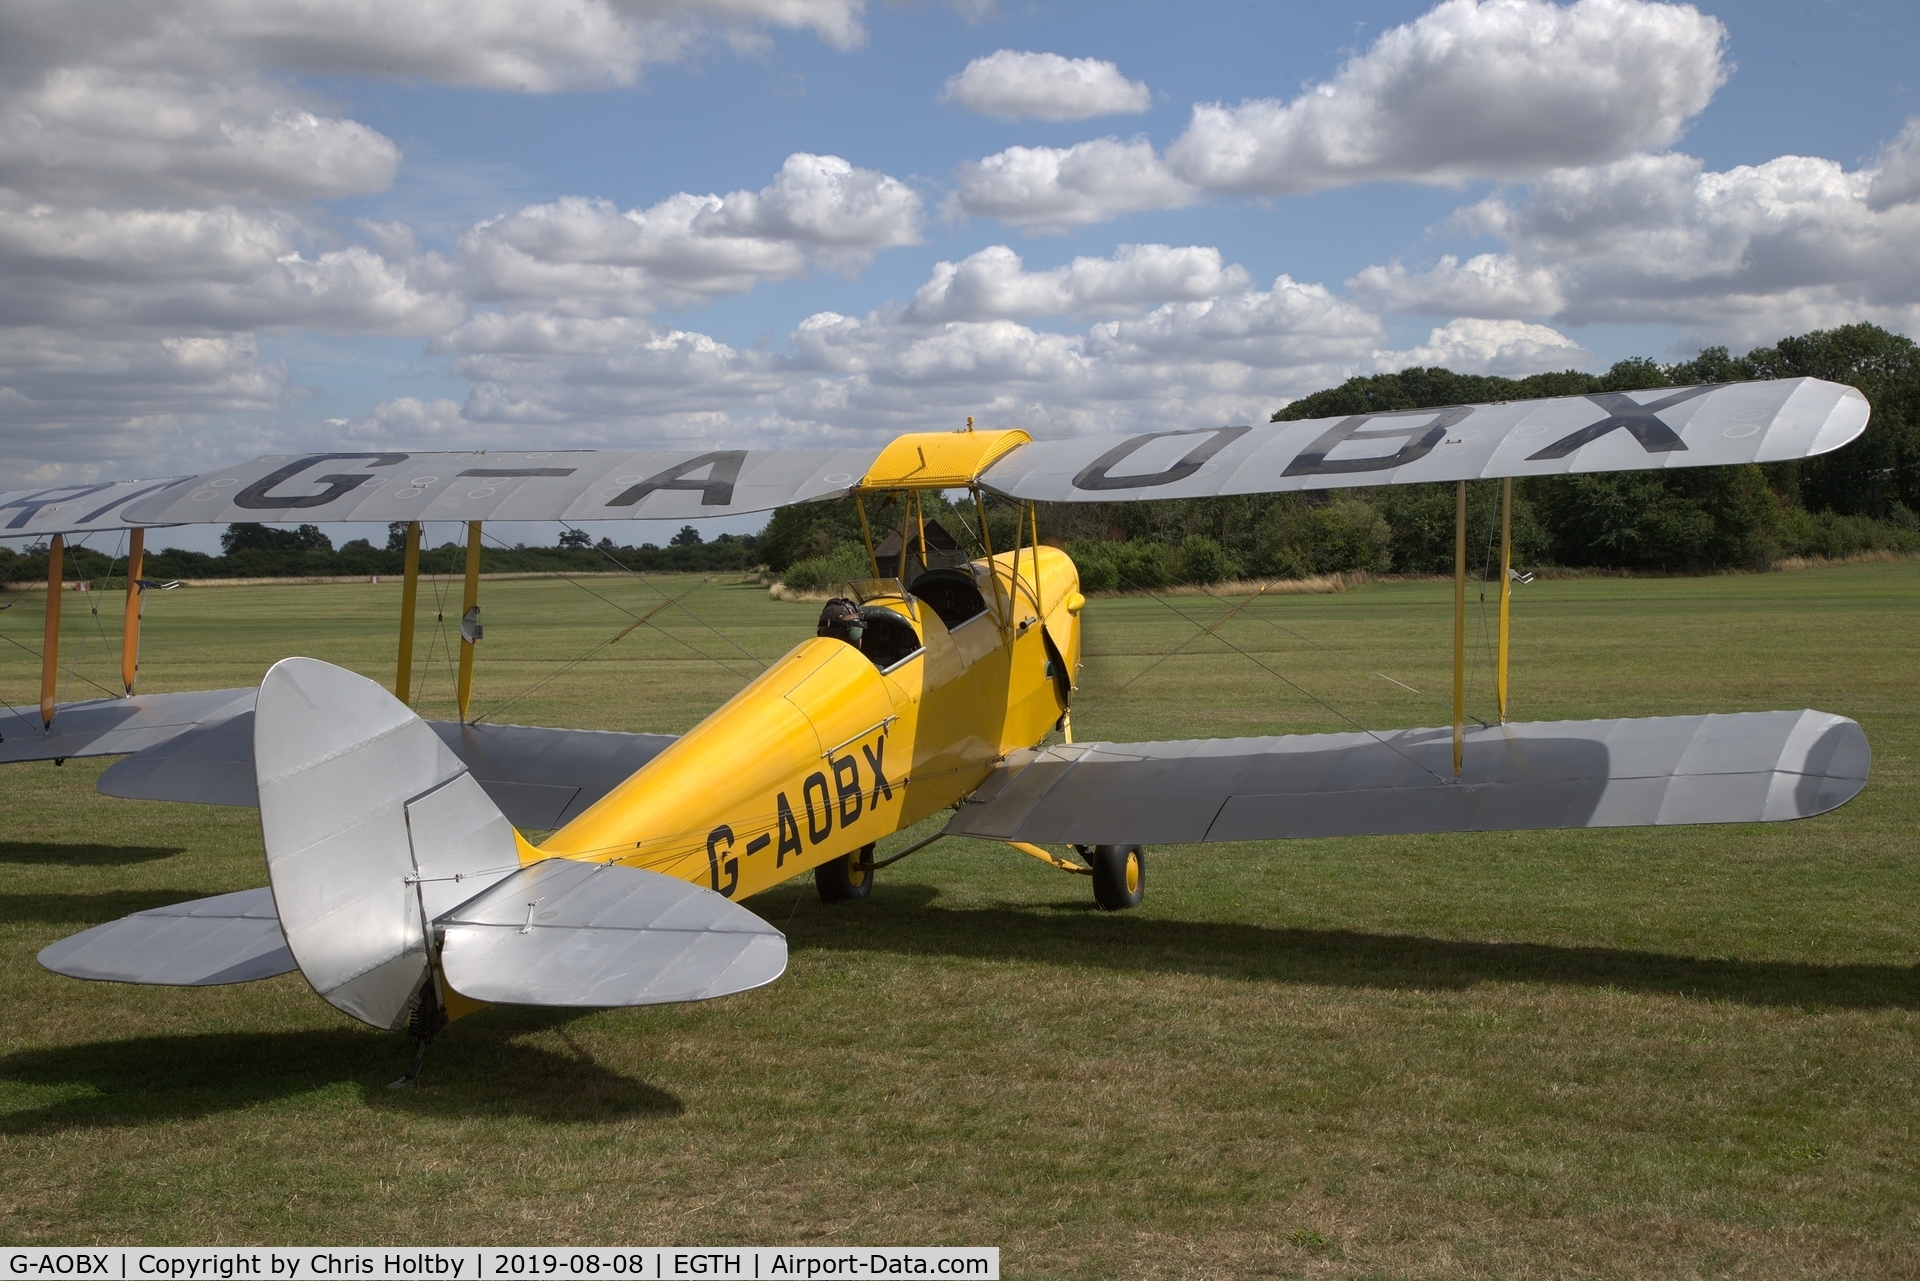 G-AOBX, 1940 De Havilland DH-82A Tiger Moth II C/N 83653, 1940 Tiger Moth at the Gathering of Moths Day 2019 at Old Warden